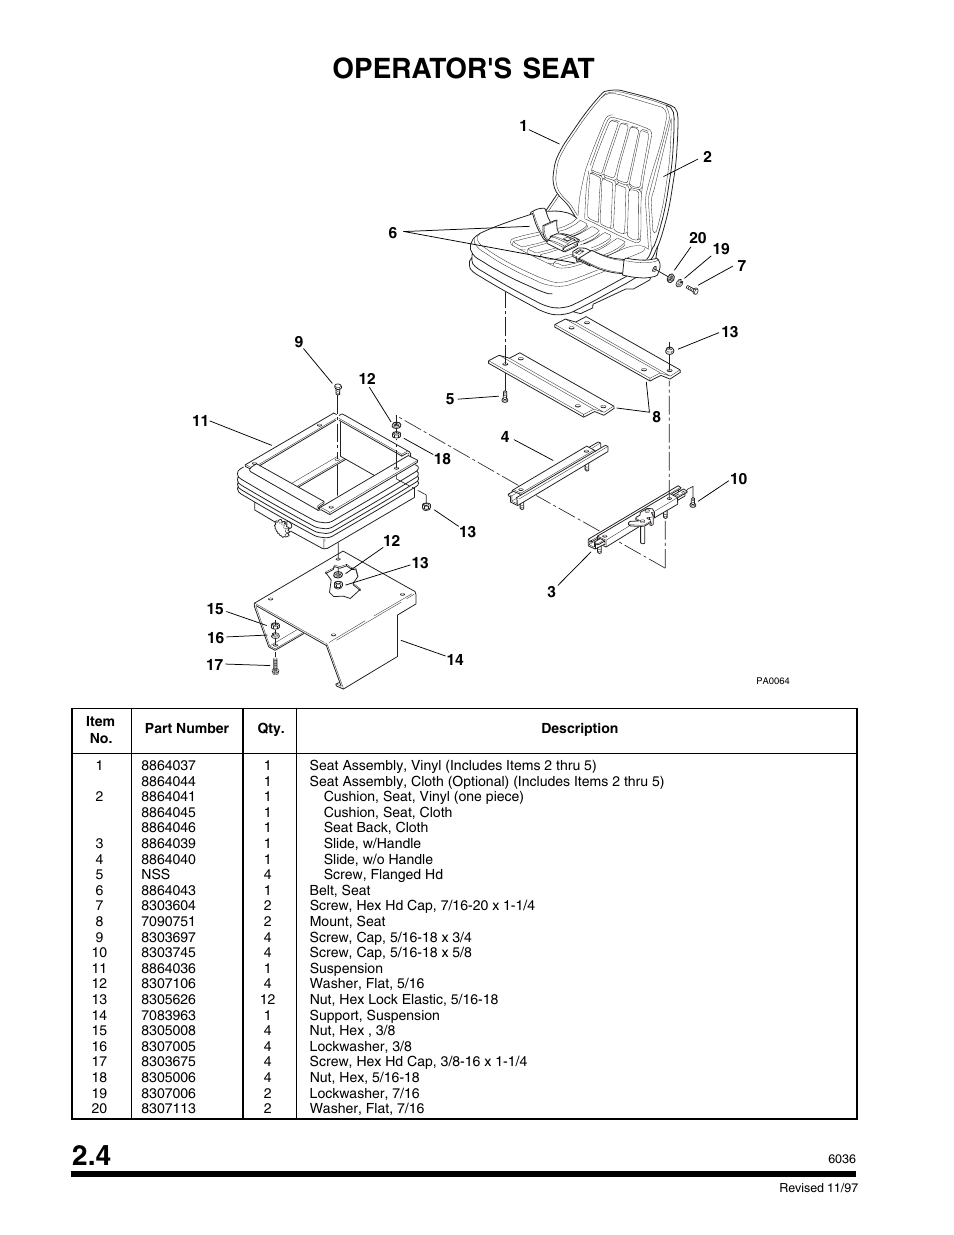 Operator's seat | SkyTrak 6036 Parts Manual User Manual | Page 18 / 300